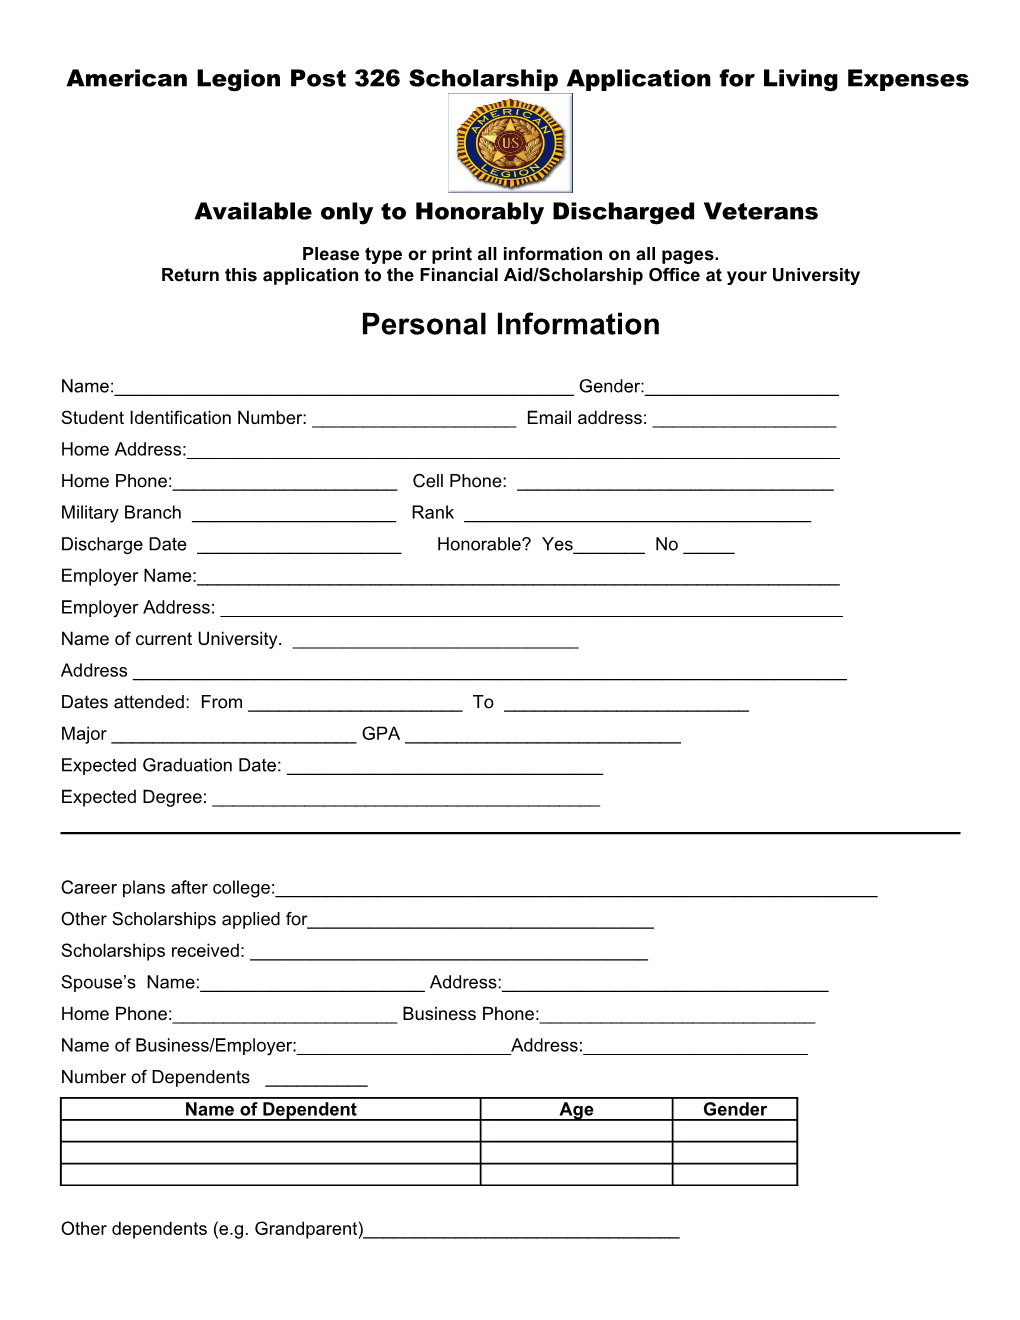 American Legion Post 326 Scholarship Application